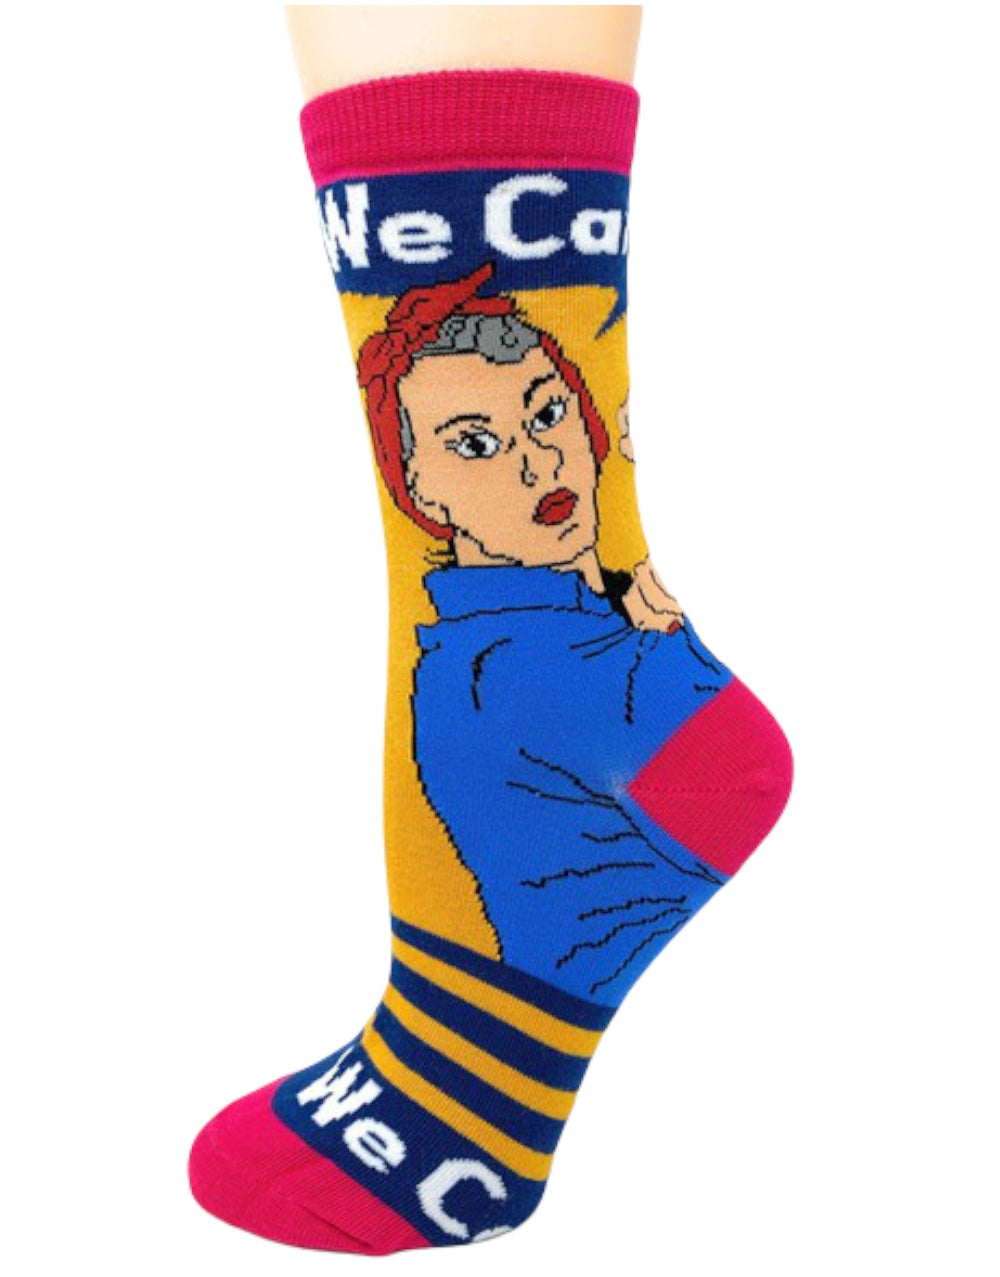 "We Can" Print Girl Slay Women's Crew Socks